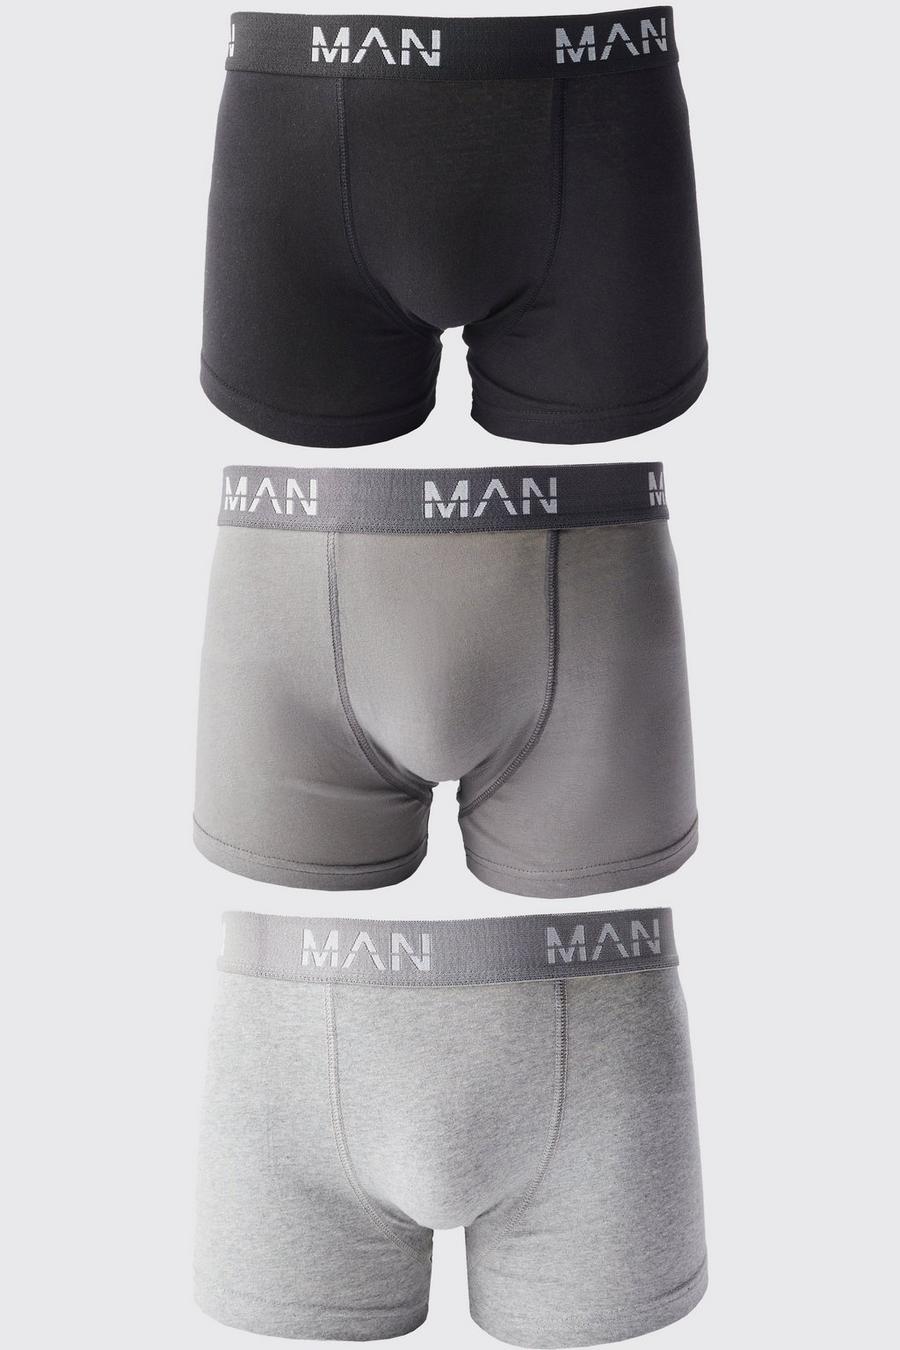 Boxer Man Dash tono su tono misti - set di 3 paia, Multi image number 1